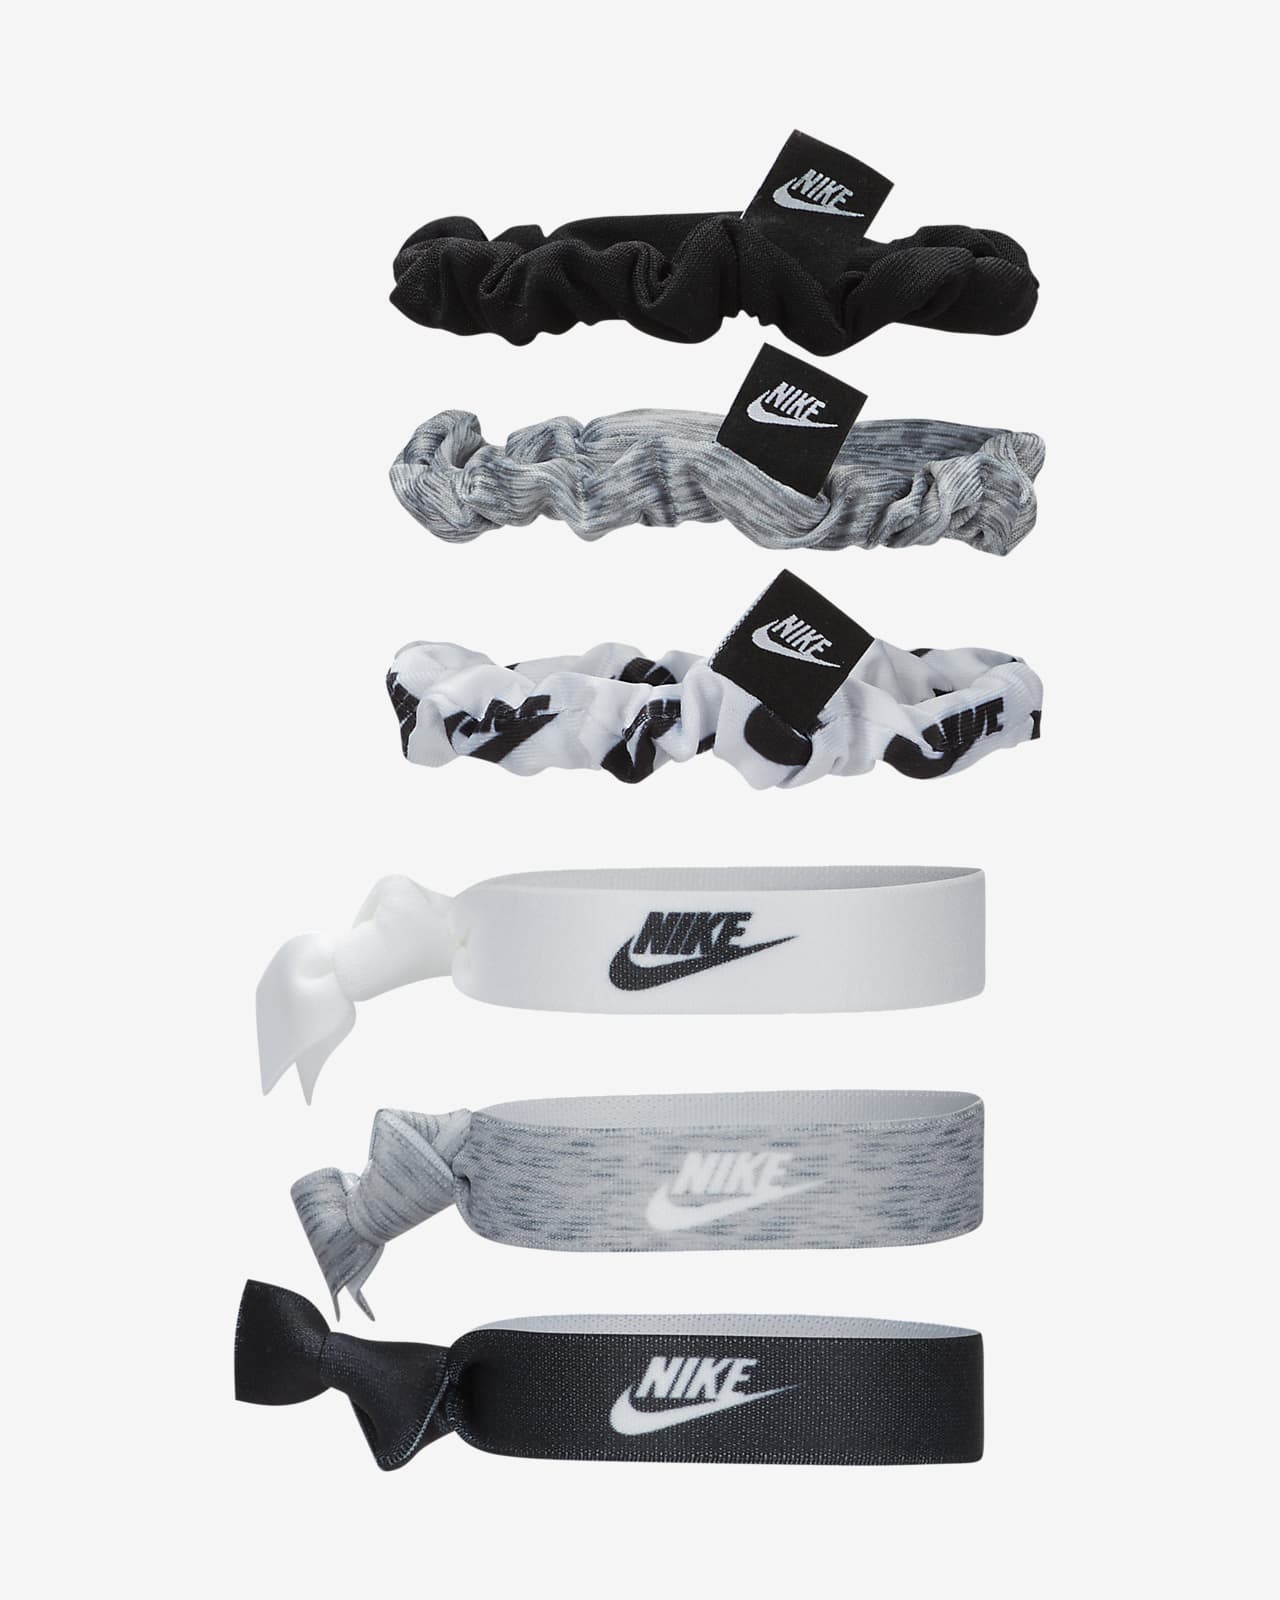 Nike Presents Its All-New United Pack